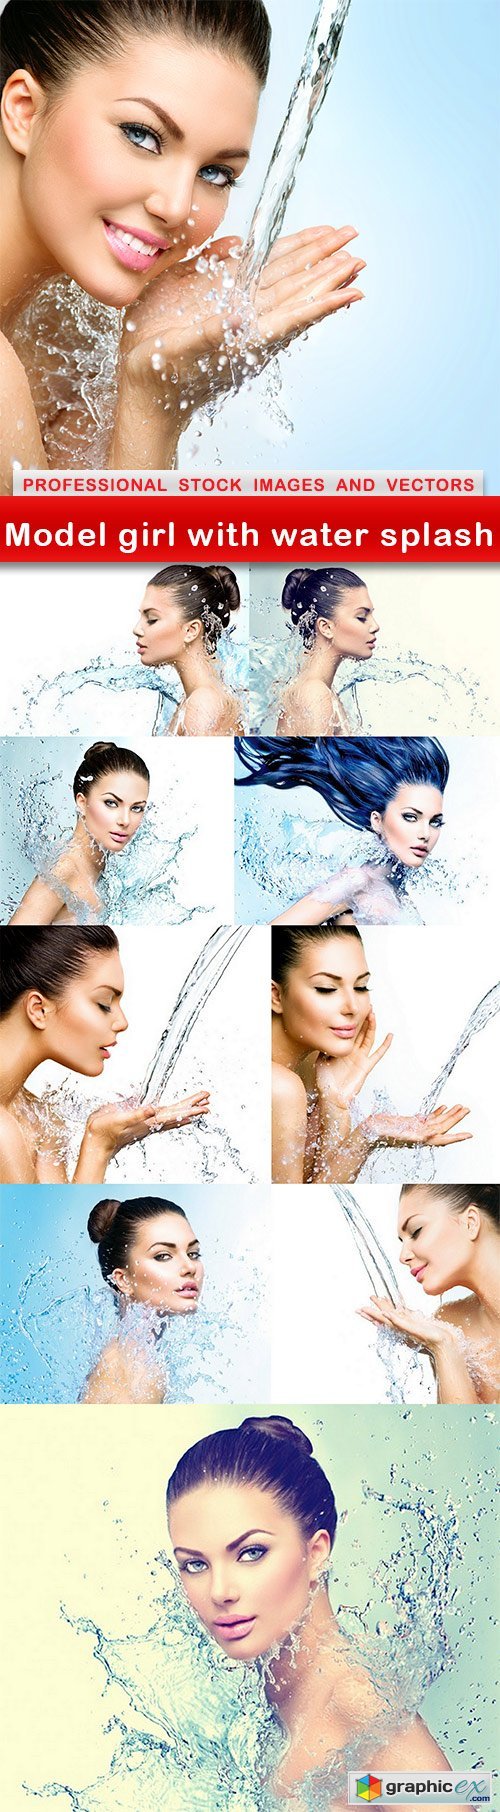 Model girl with water splash - 10 UHQ JPEG